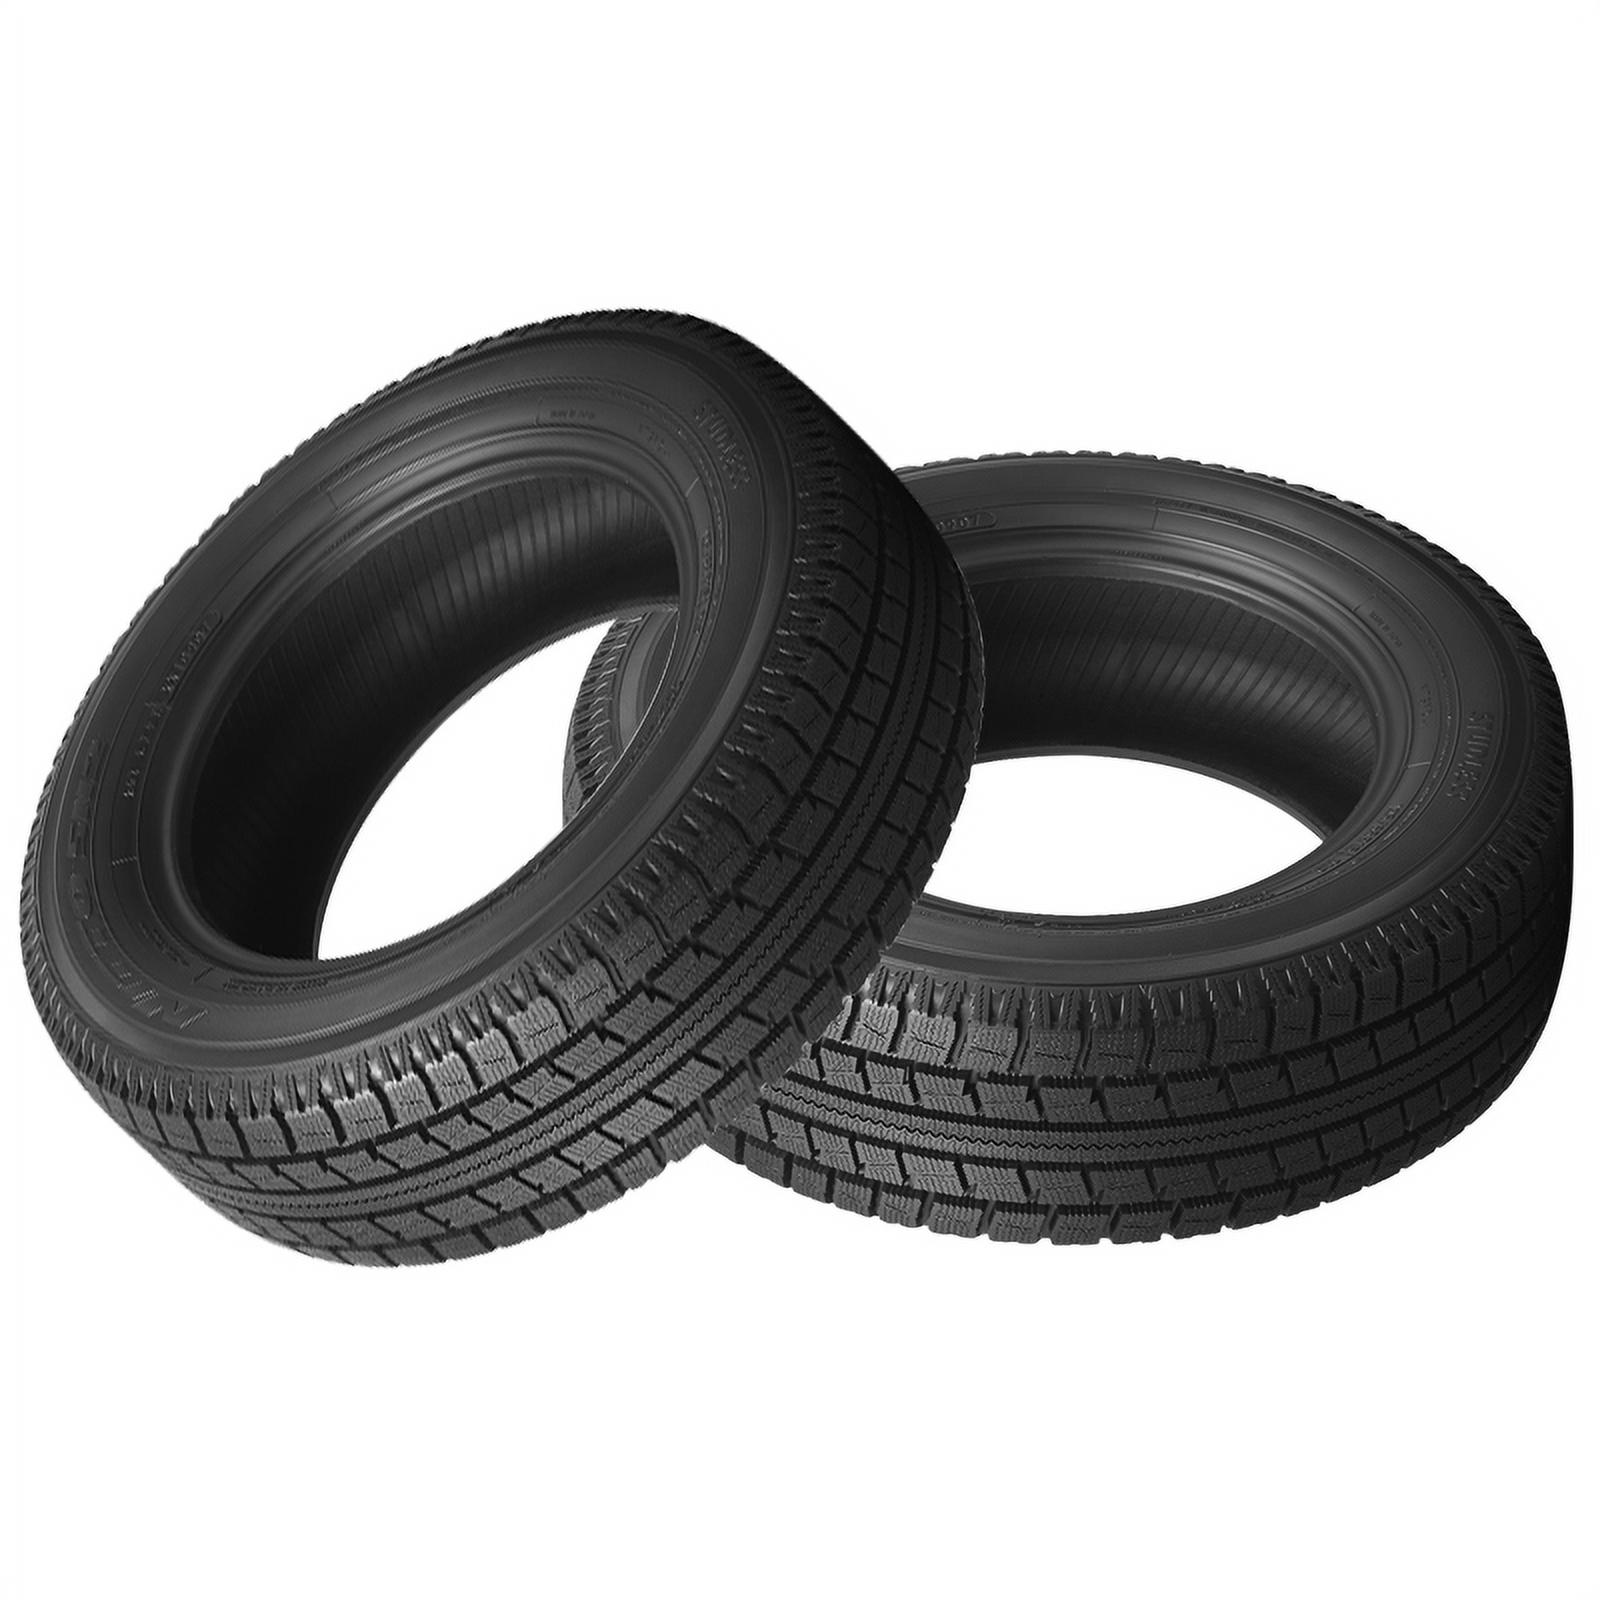 Nitto winter ntsn2 LT235/65R17 winter tire - image 2 of 5